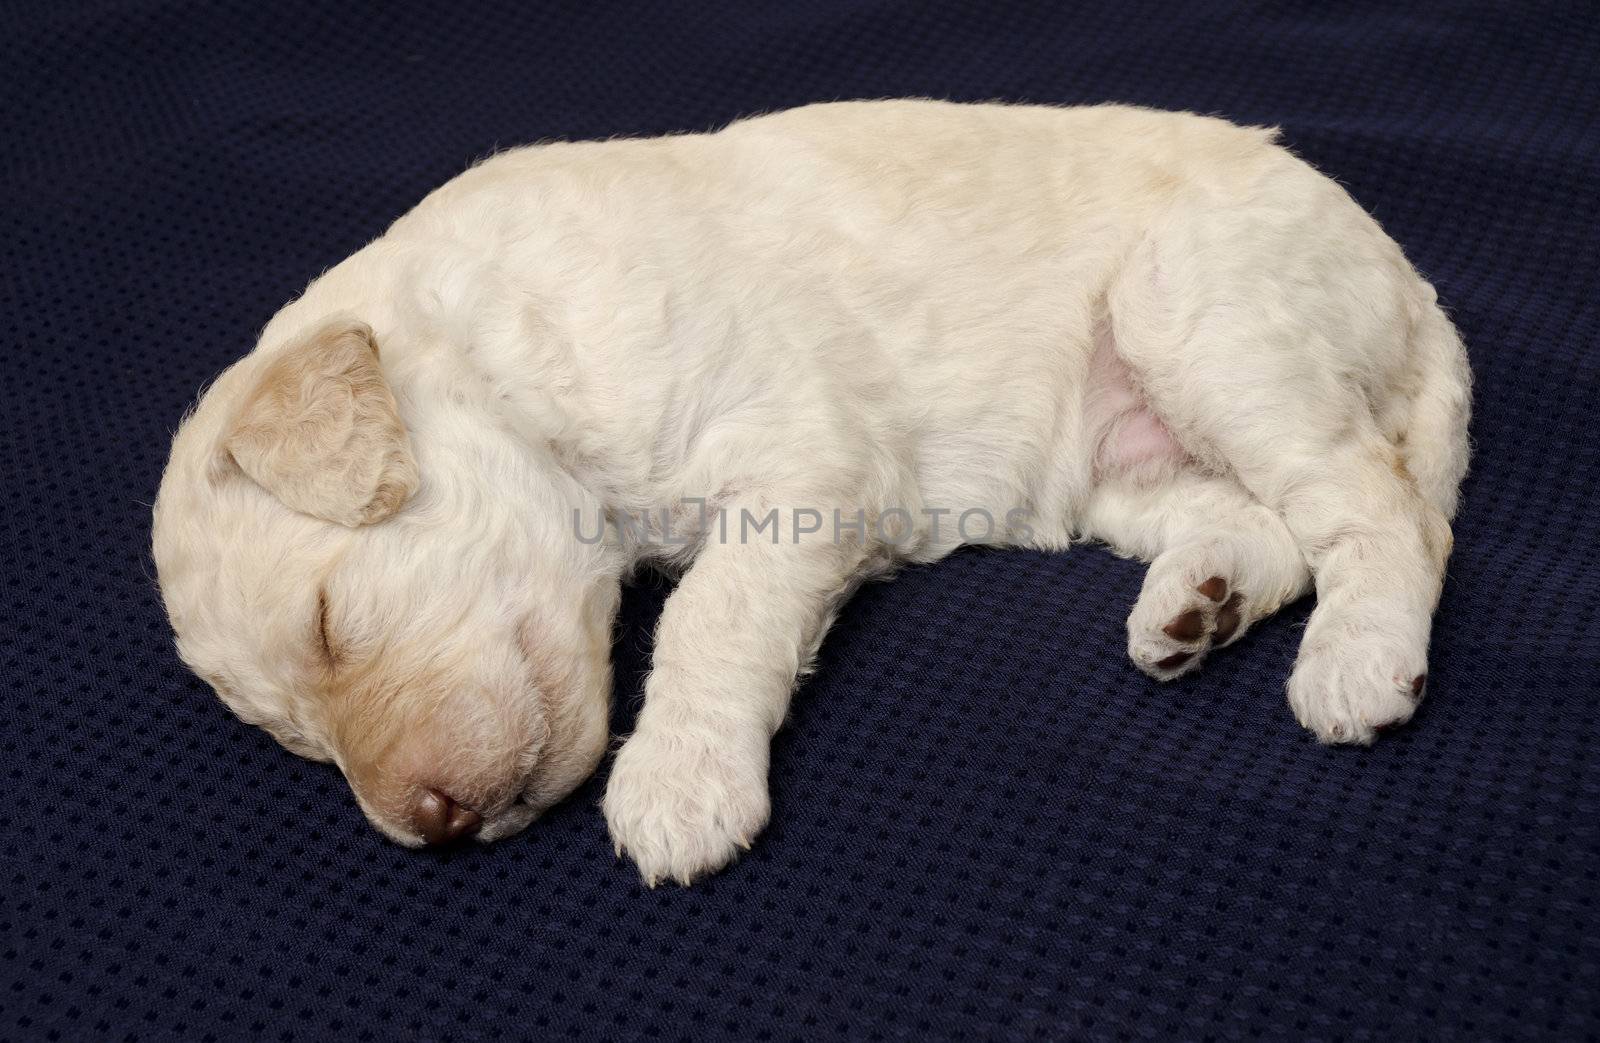 White labradoodle puppy sleeping on a dark blanket